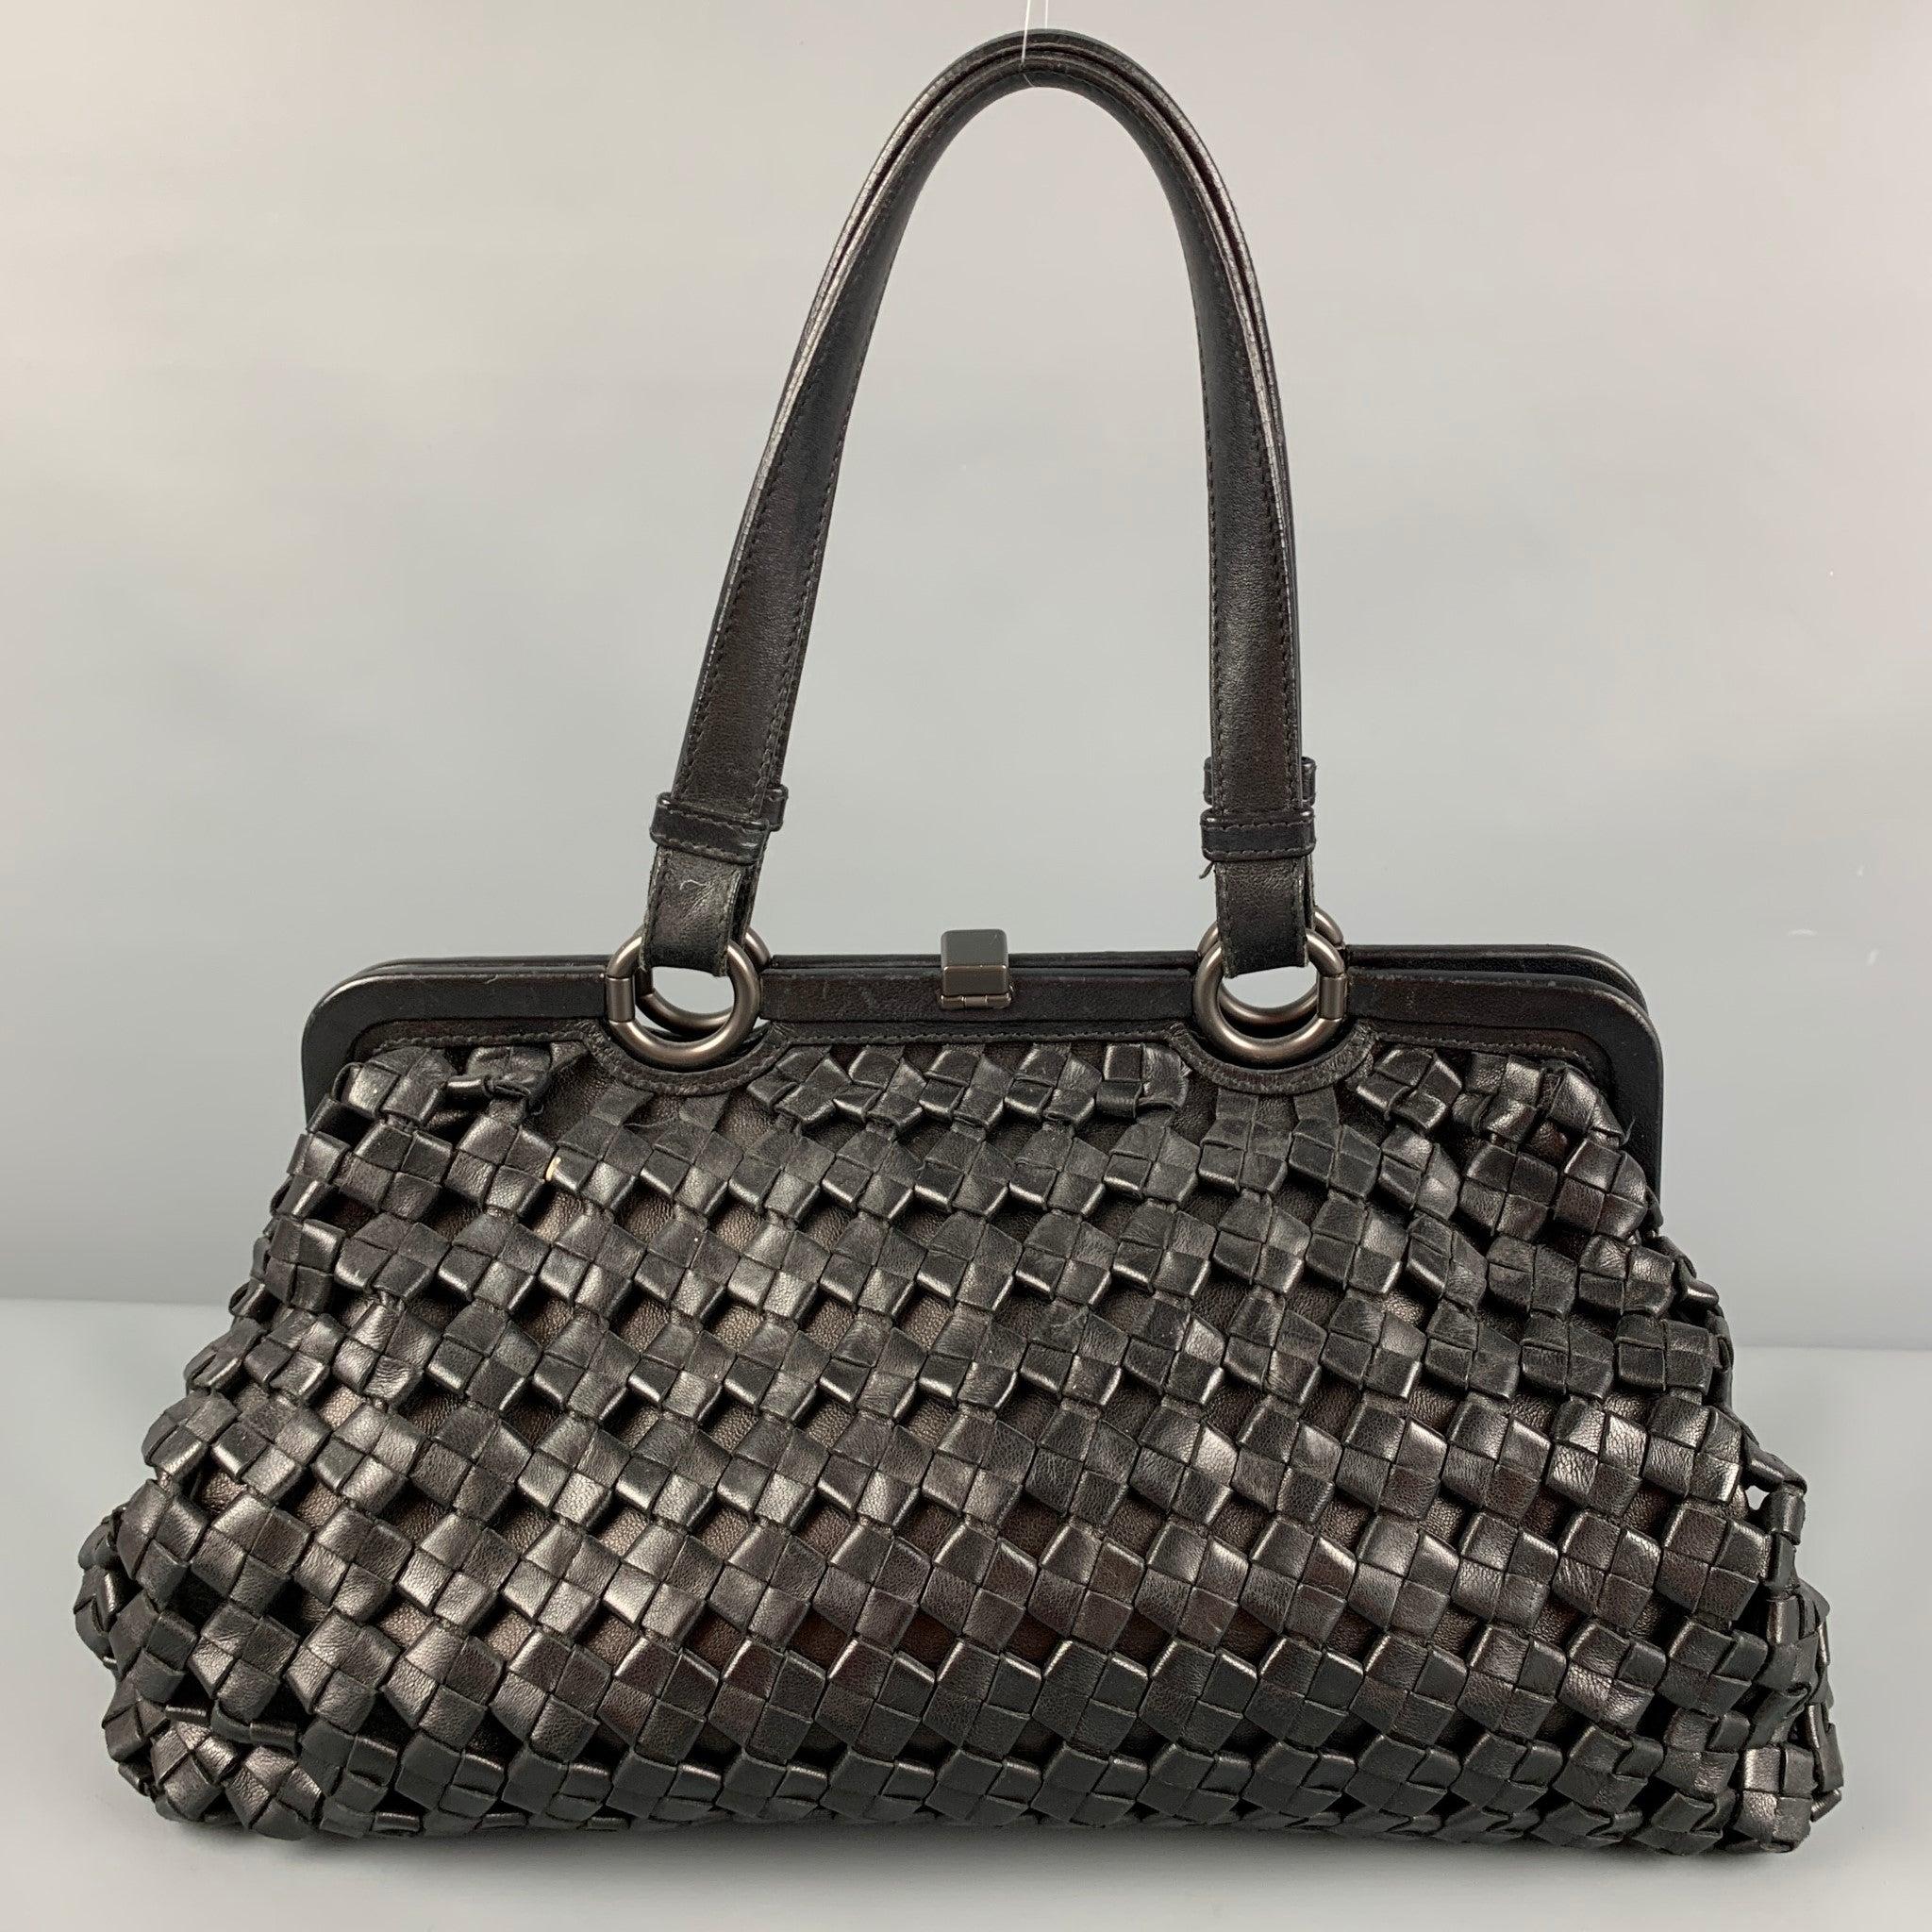 BOTTEGA VENETA Limited Edition Black Woven Leather Satchel Handbag In Good Condition For Sale In San Francisco, CA